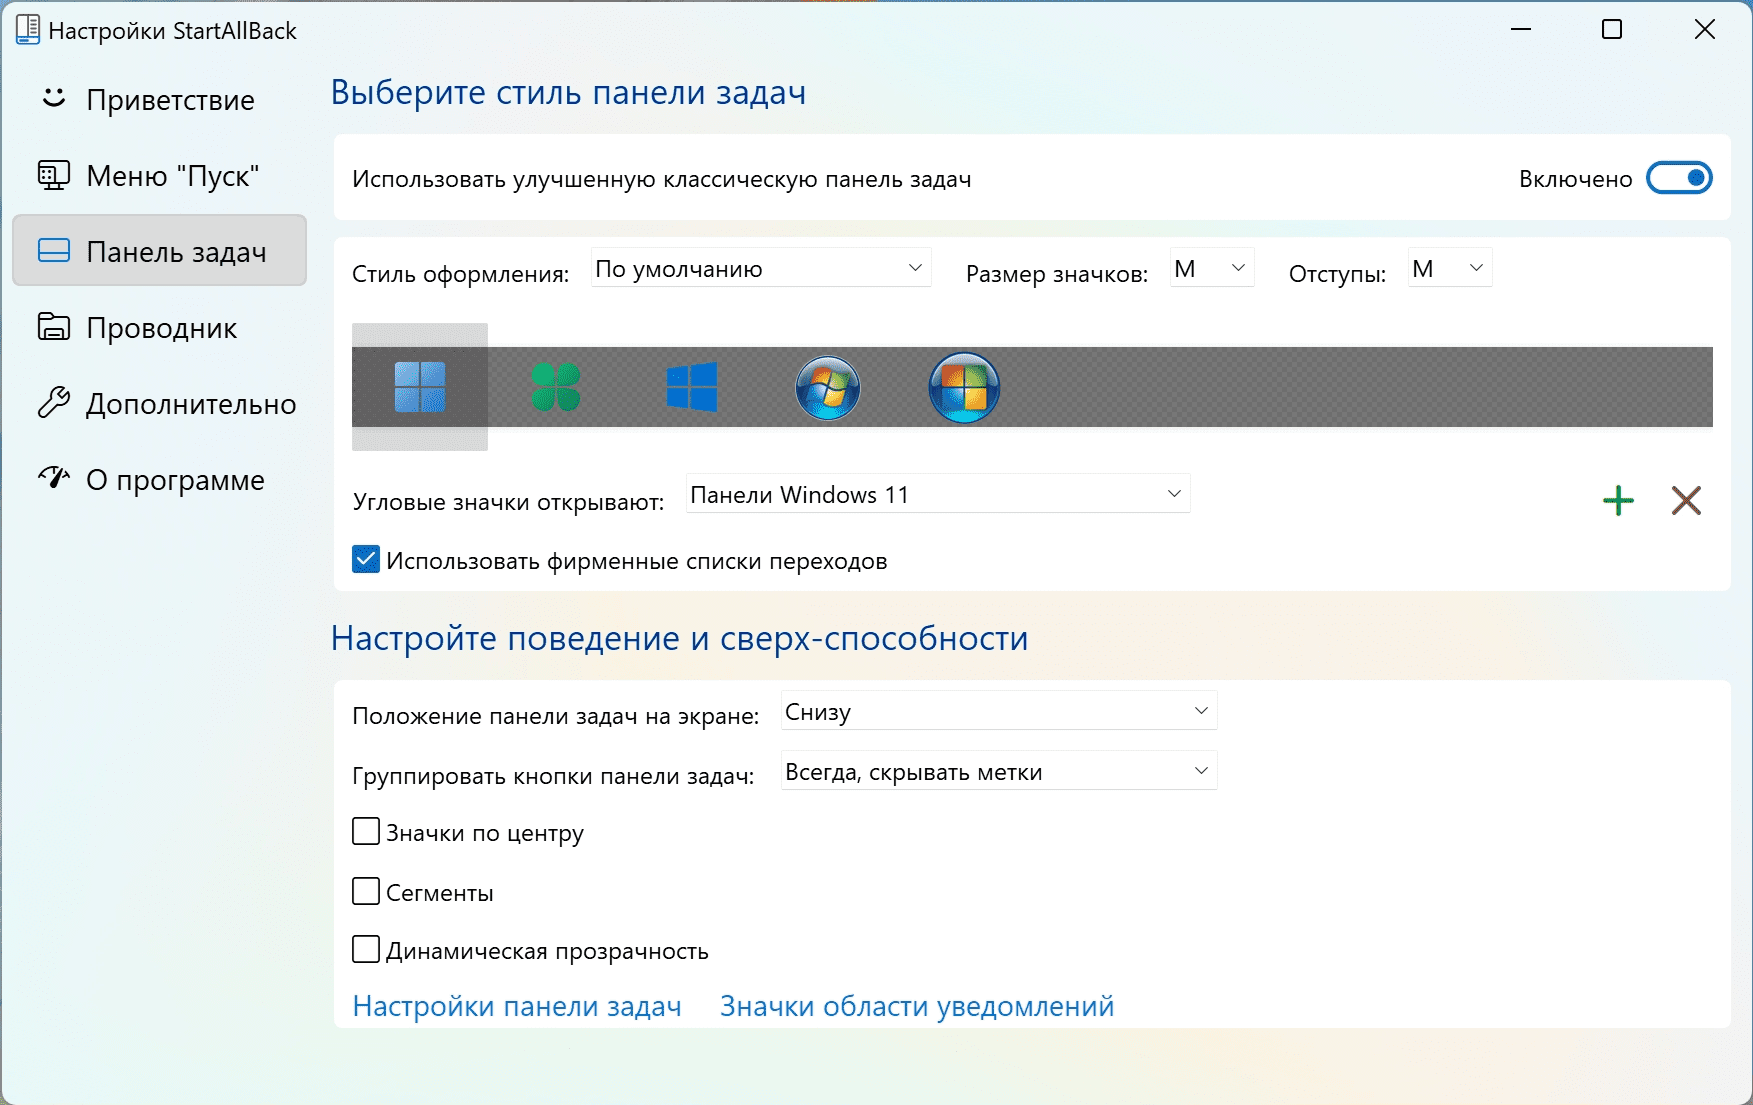 for windows instal StartAllBack 3.6.10